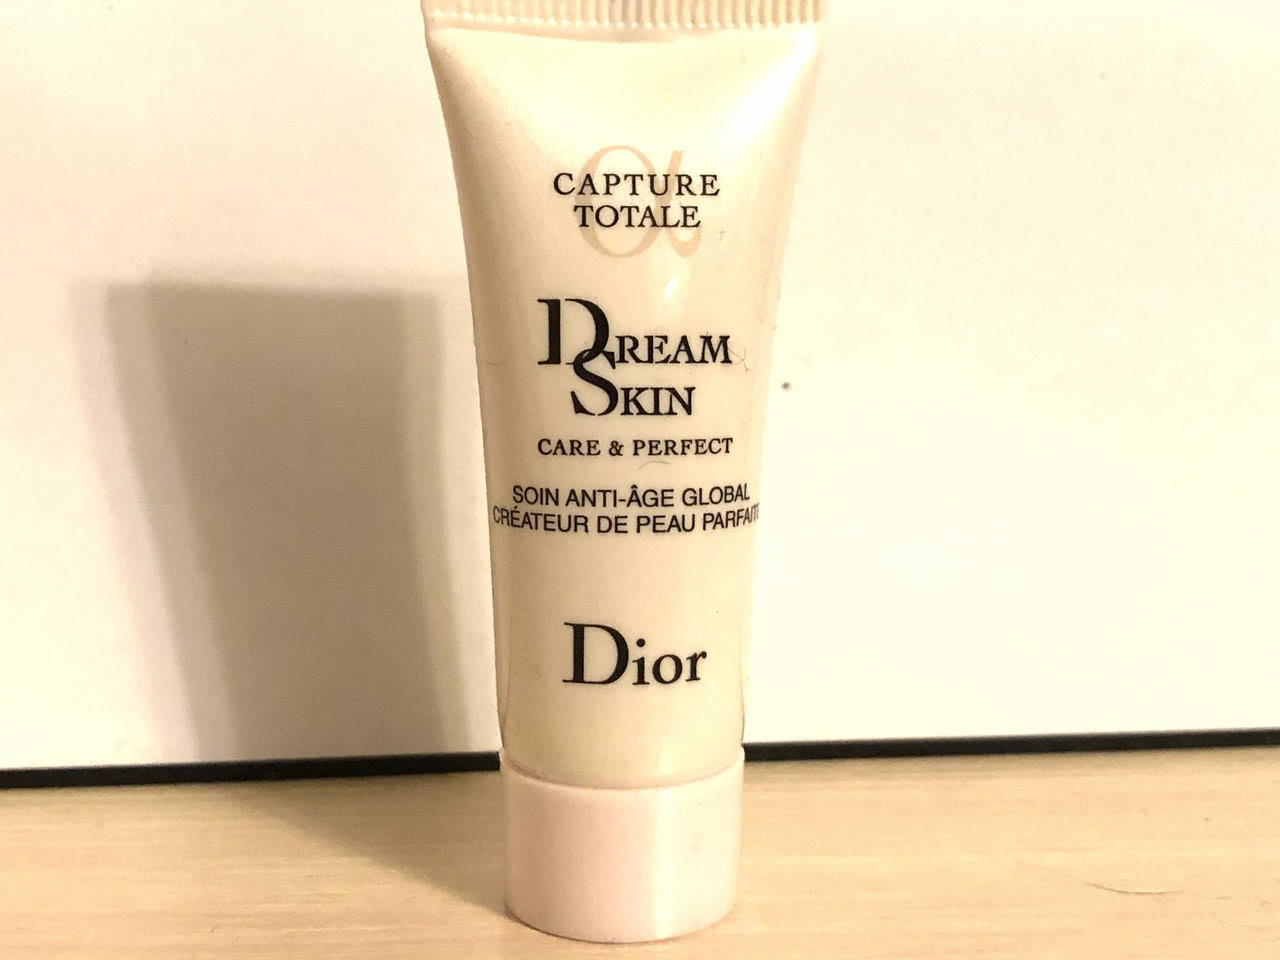 Dior DreamSkin Capture Totale